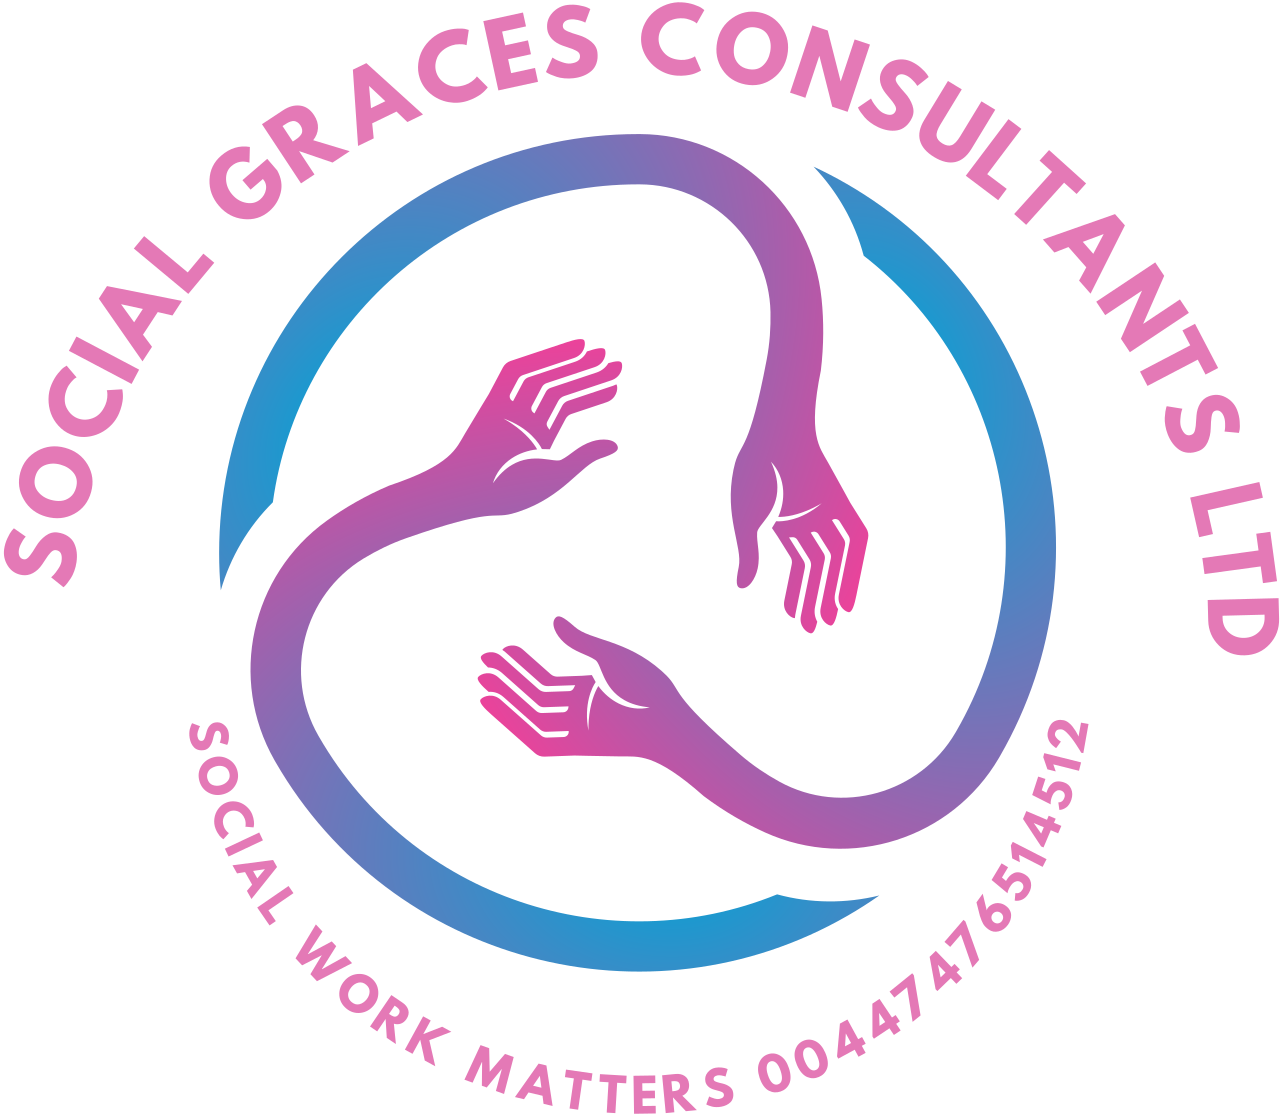 SOCIAL GRACES CONSULTANTS LTD 's logo